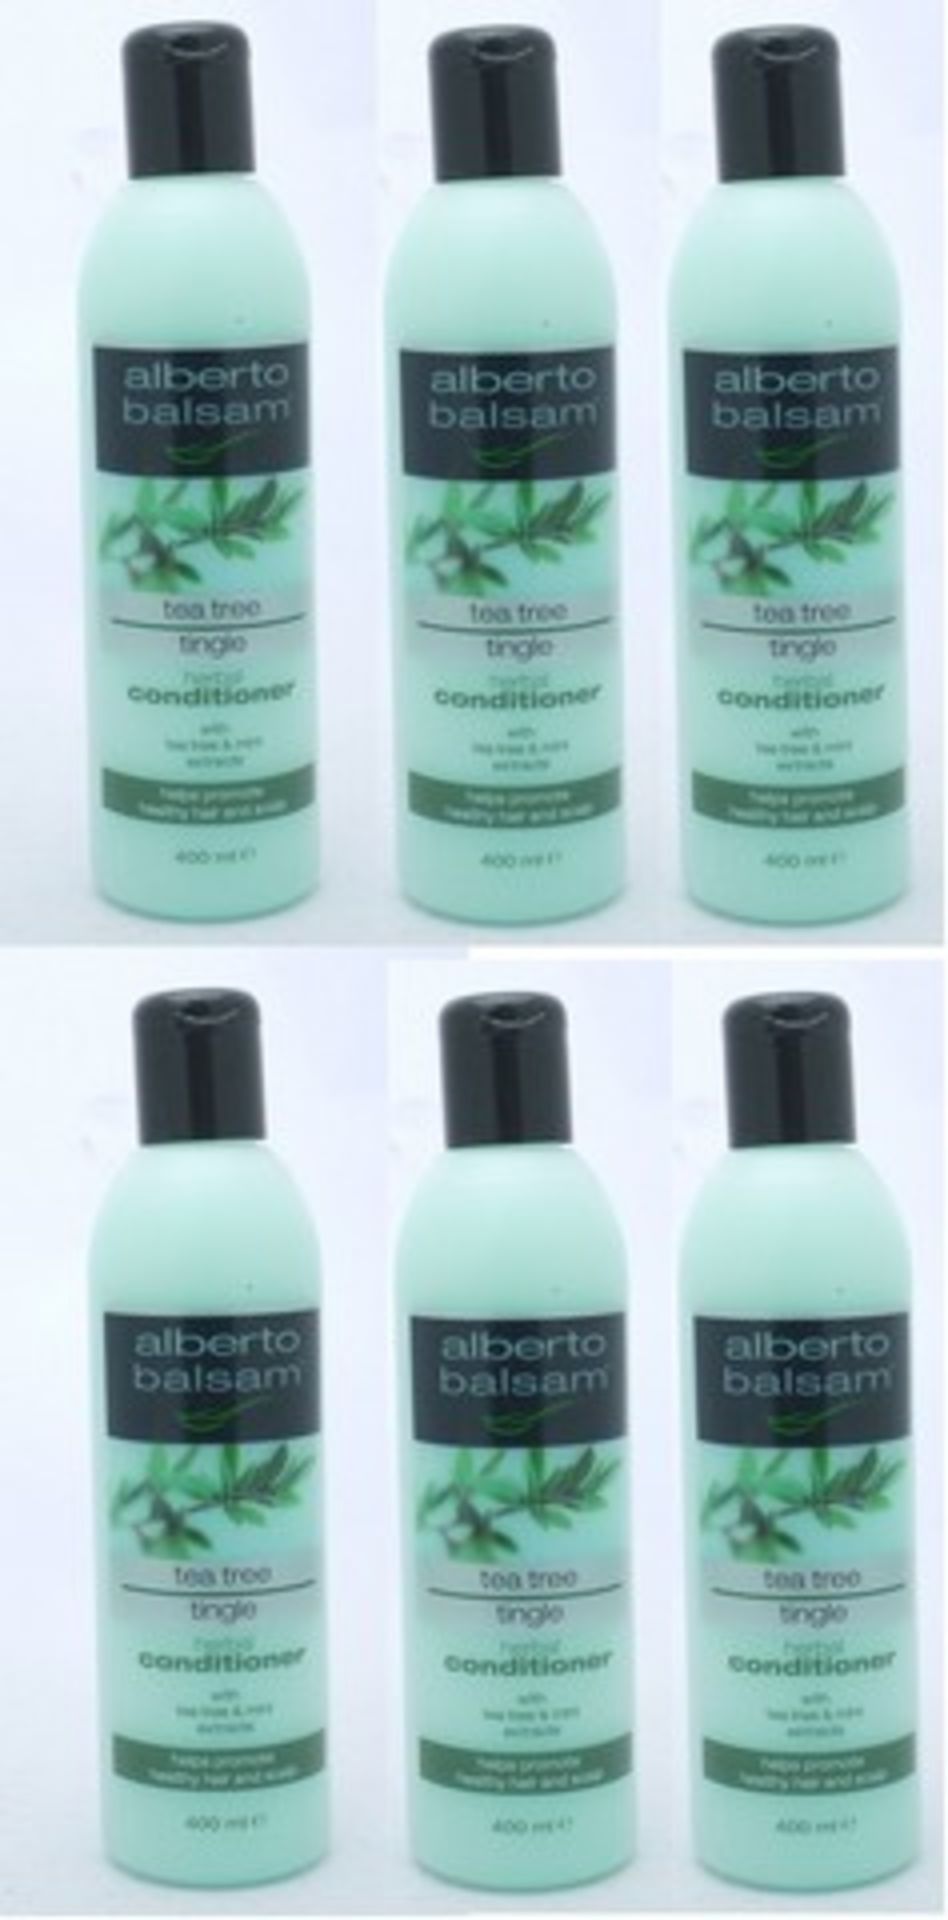 + VAT Brand New Lot Of 6 Alberto Balsam Tea Tree Tingle Herbal Conditioner 400 ml Total eBay